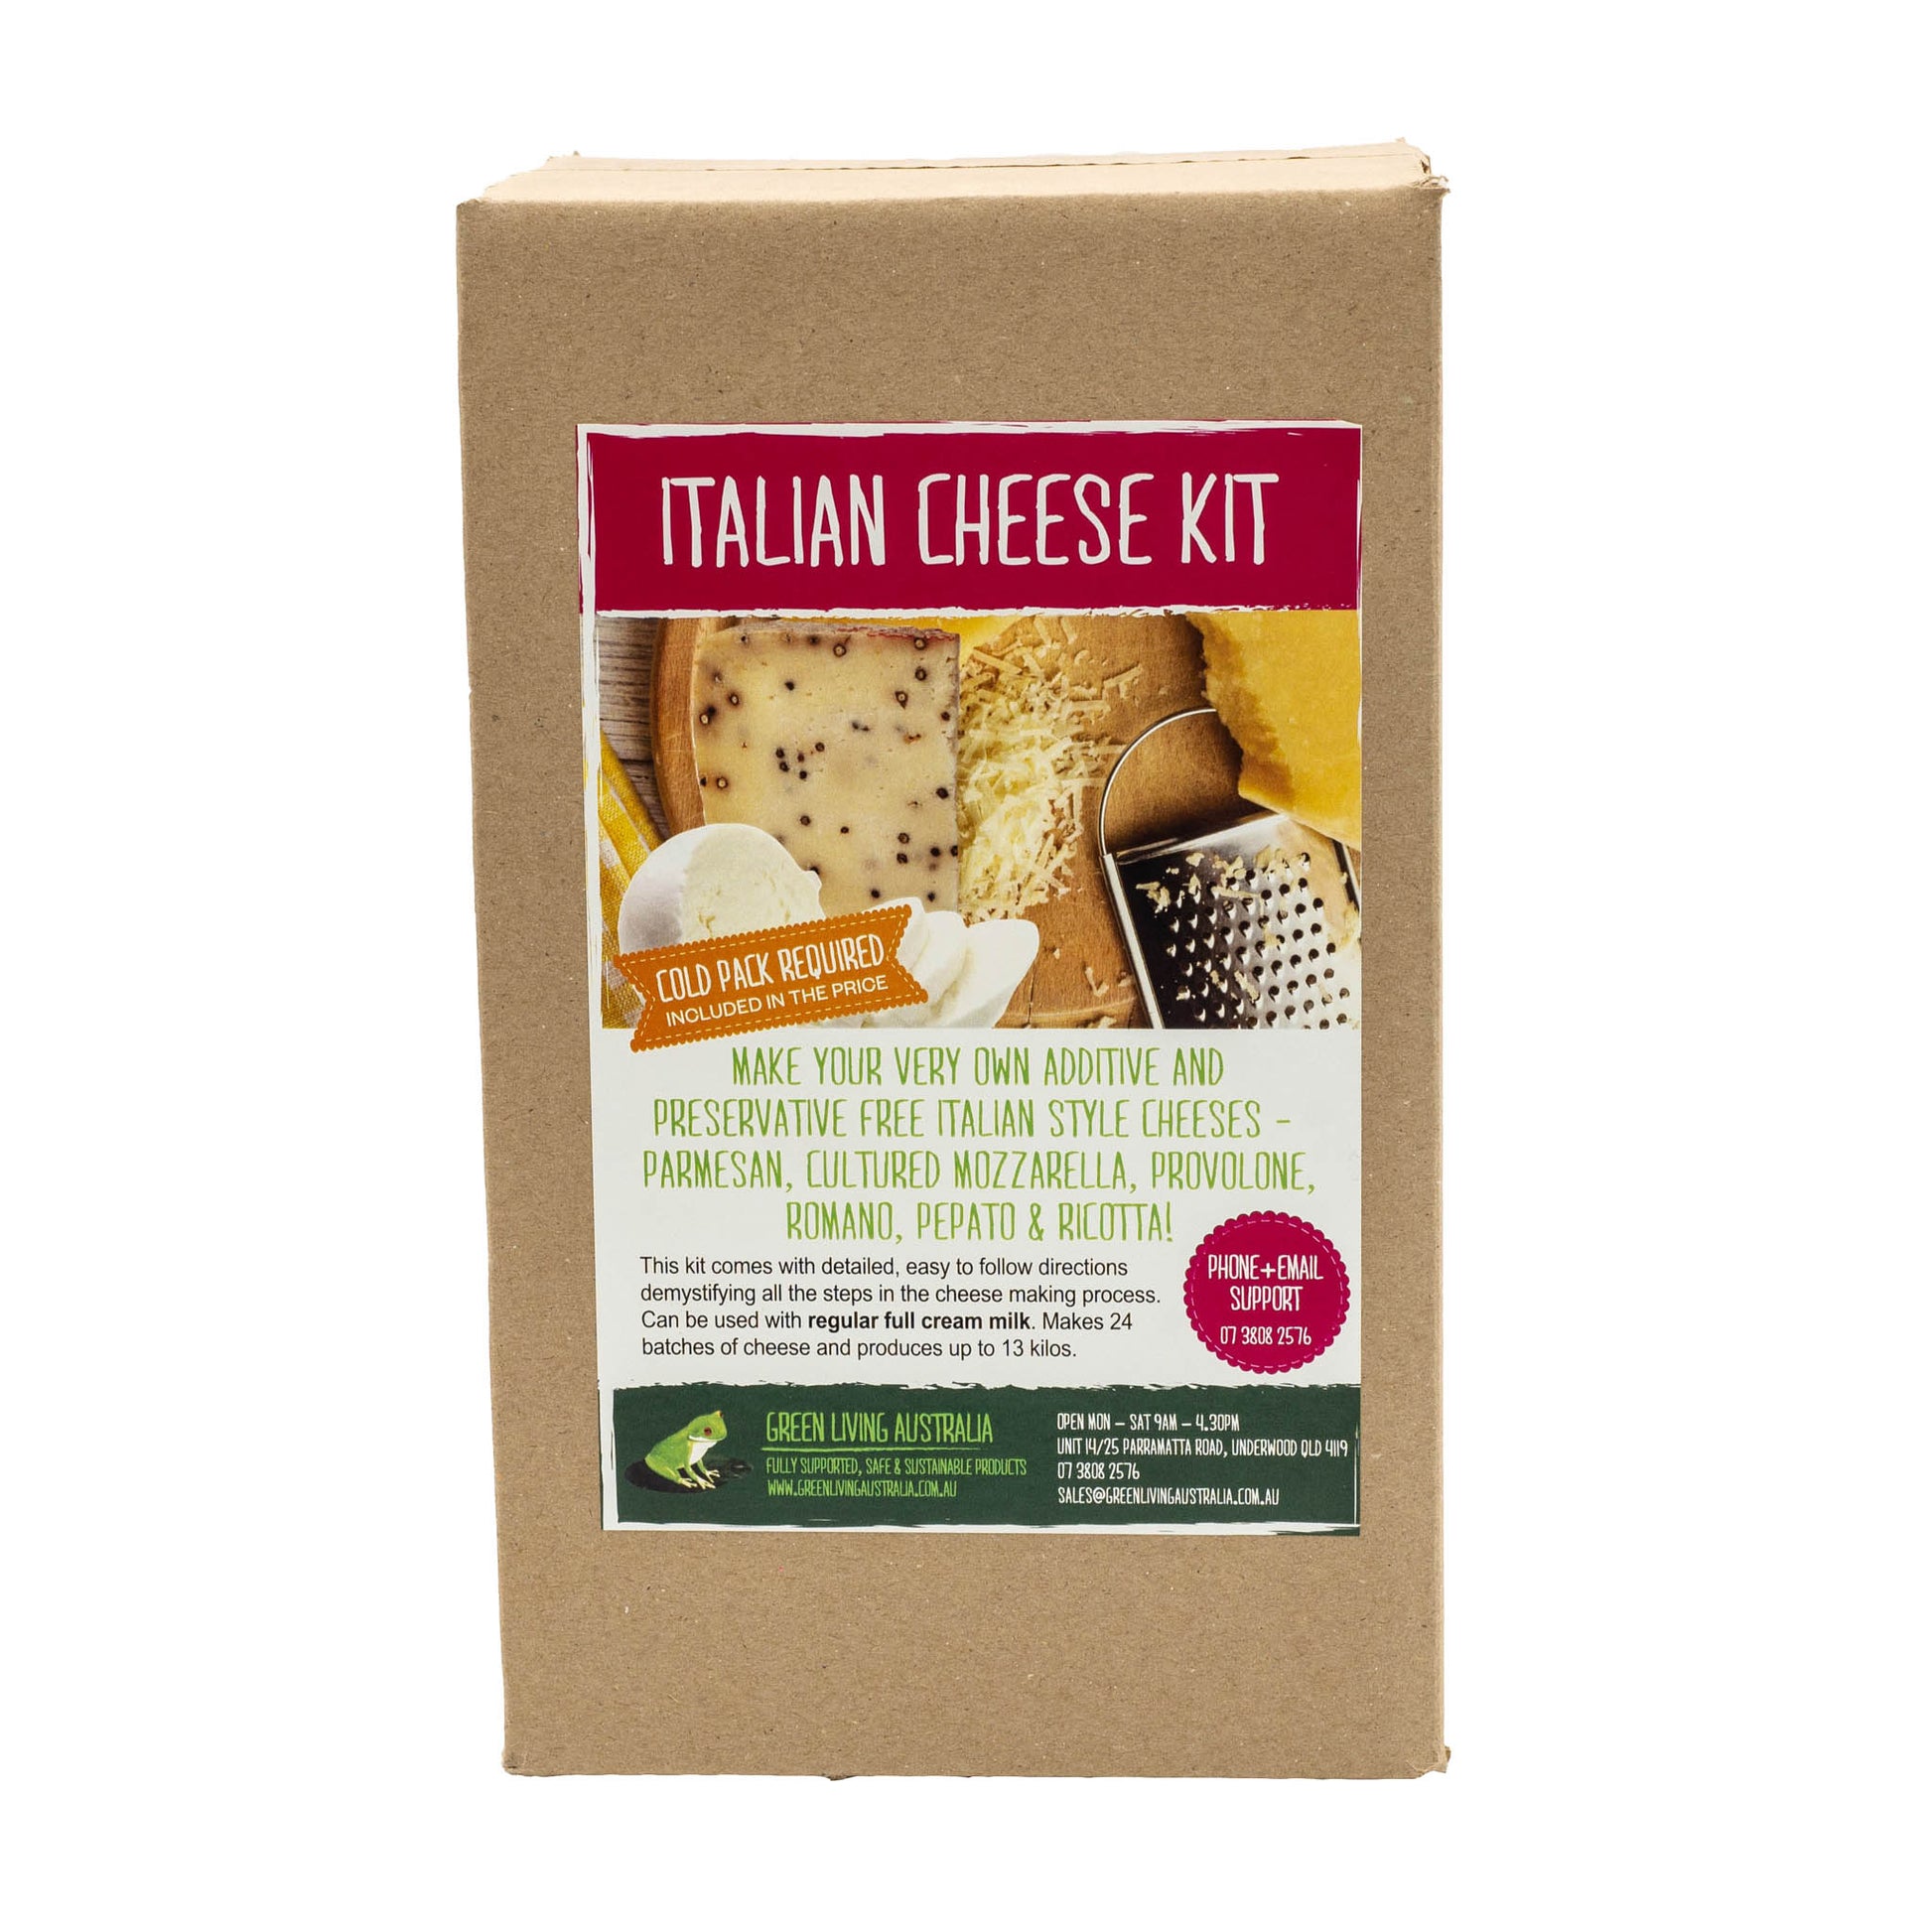 Italian cheese making kit. Makes 6 Italian style cheeses: Cultured Mozzarella, Provolone, Parmesan, Romano, Pepato and Ricotta